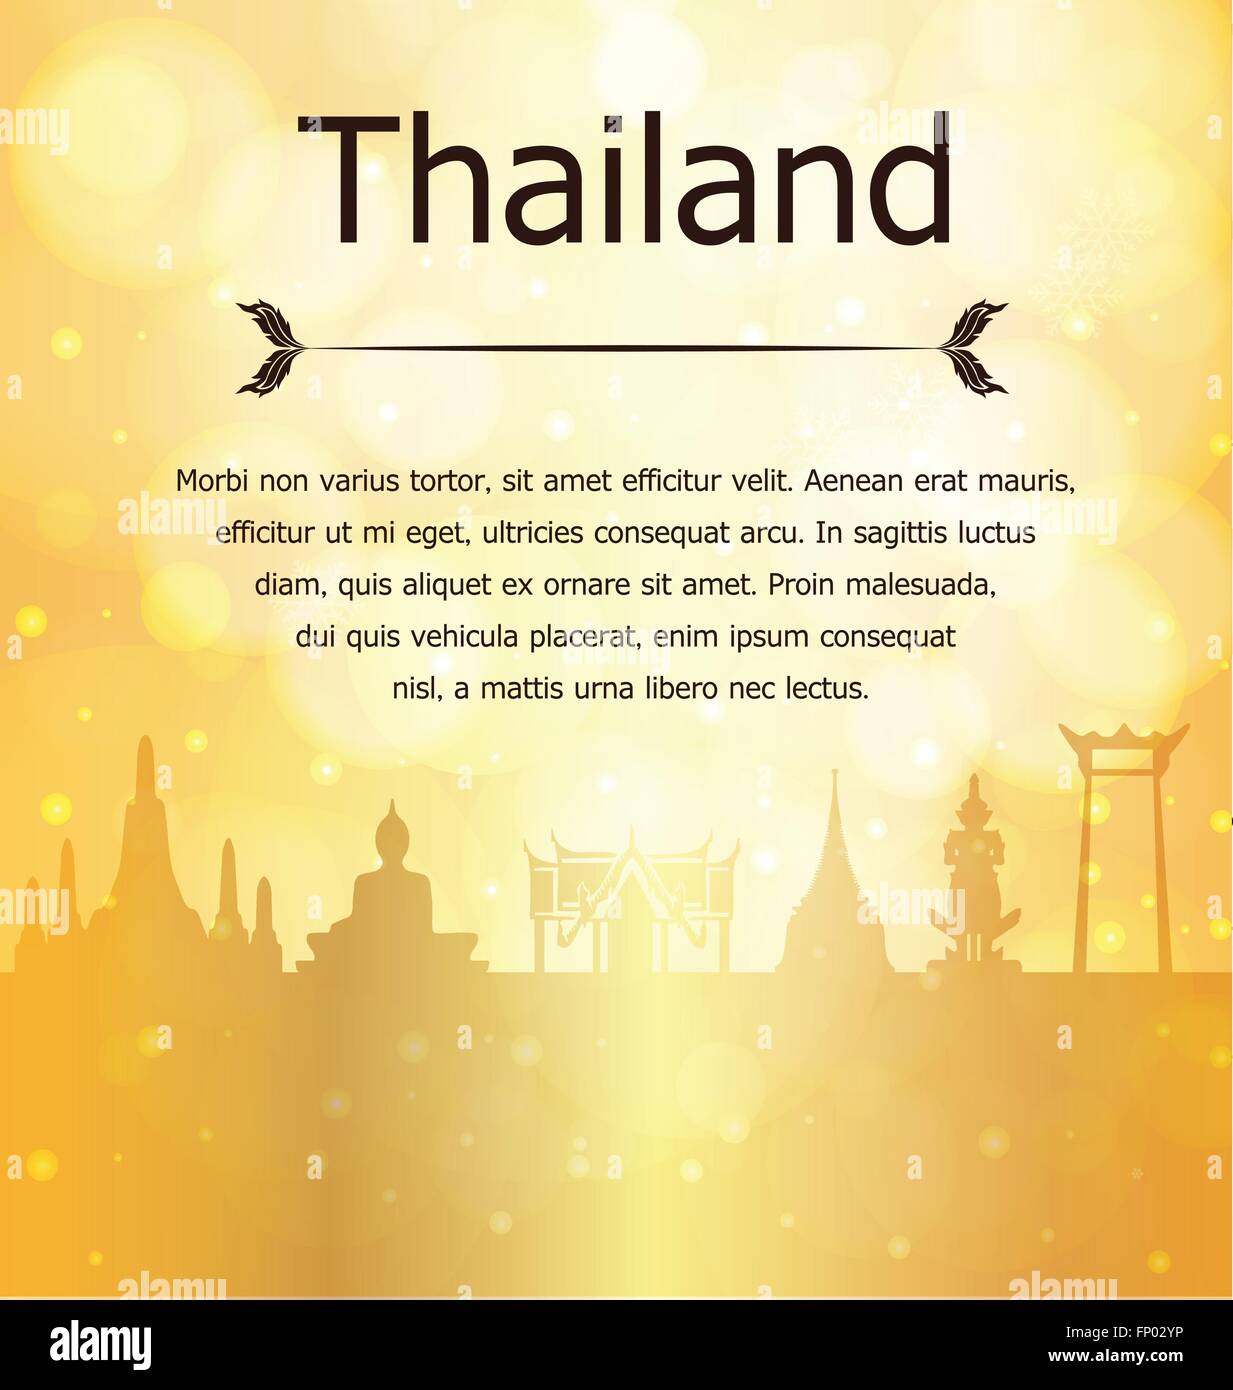 Thailand Travel Landmarks Gold Vector and Illustration Stock Vector